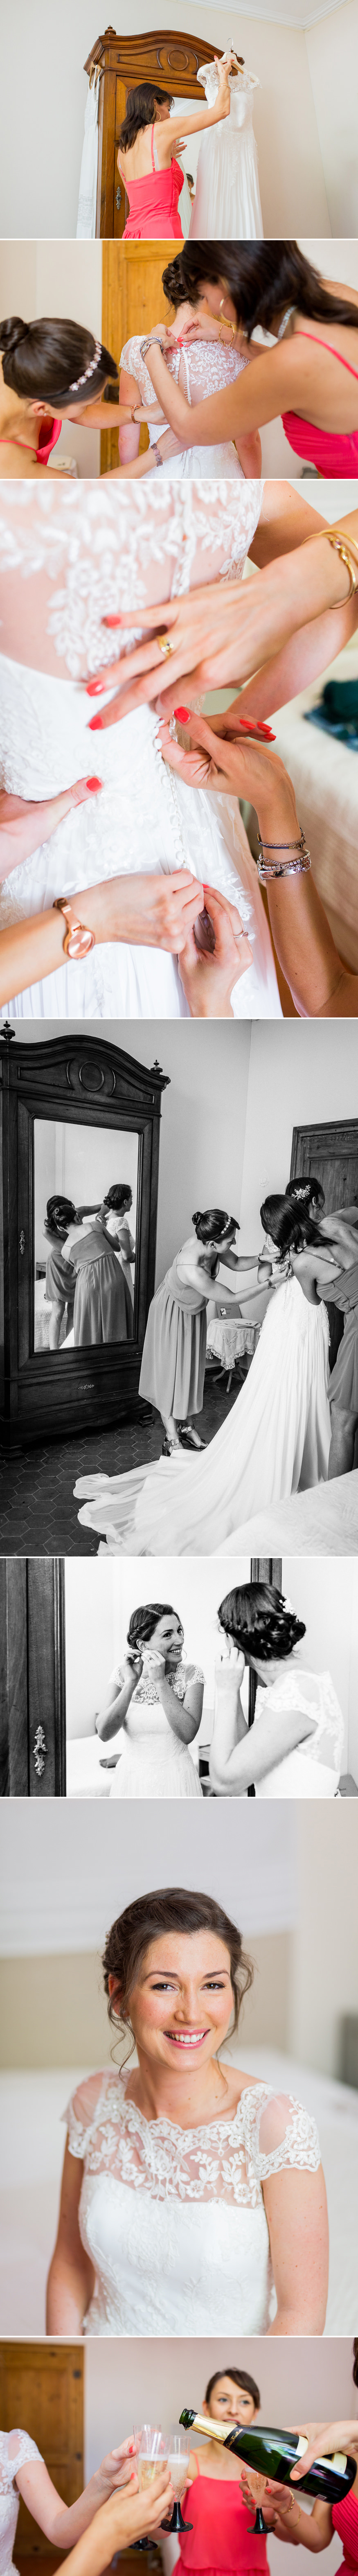 photographe mariage bouche du rhone